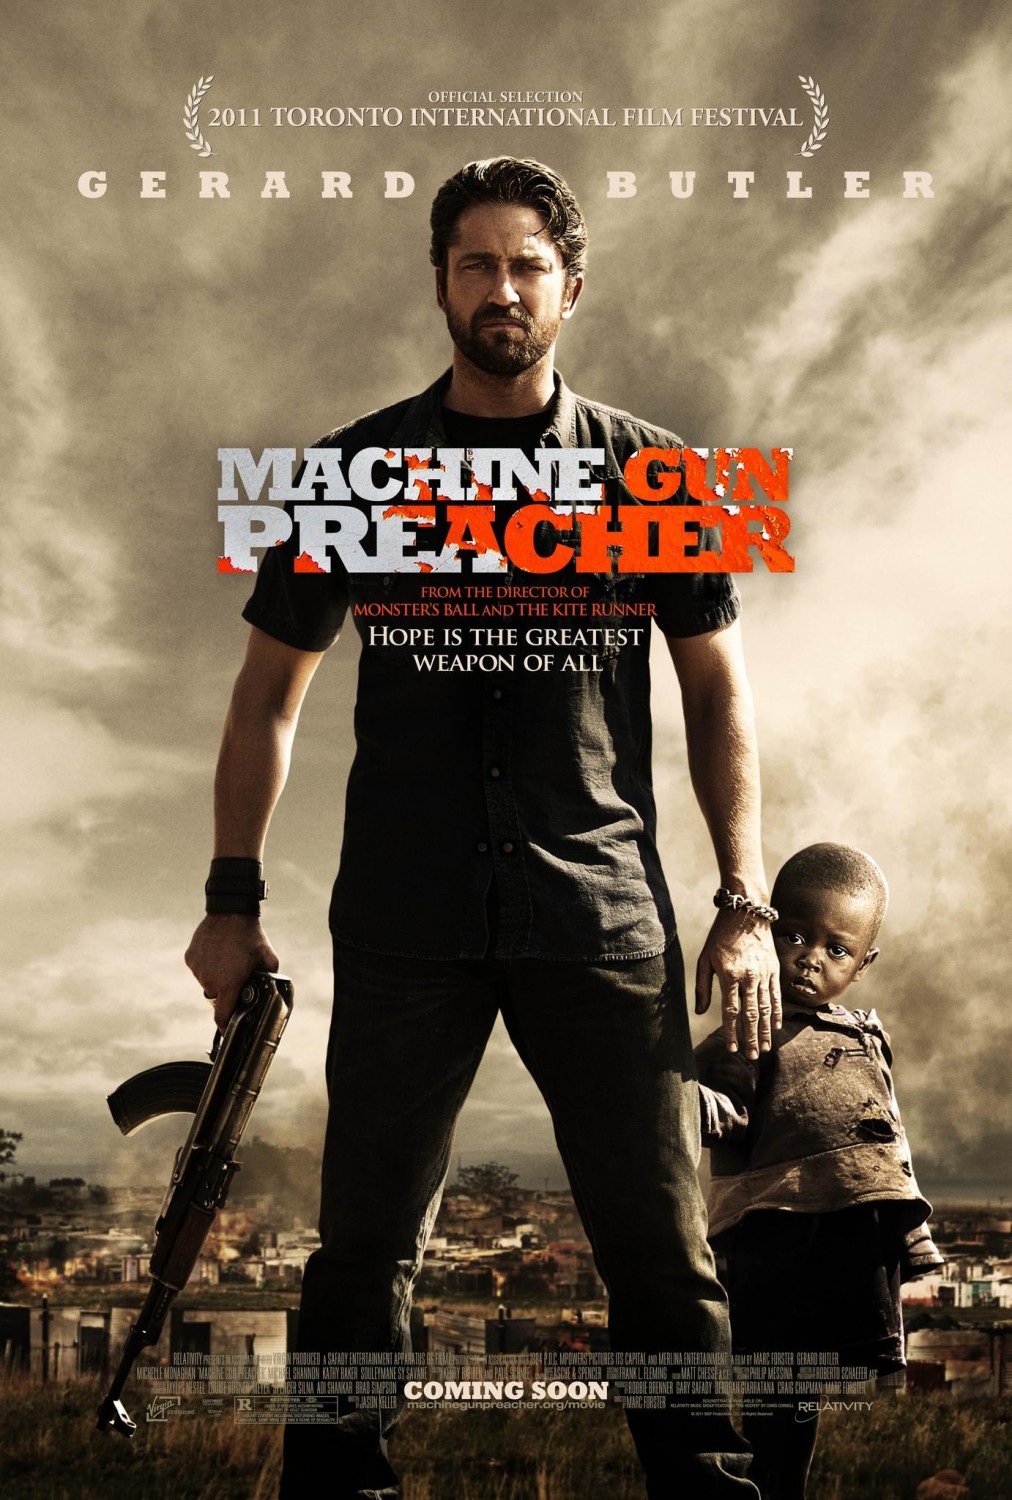 http://www.heyuguys.co.uk/images/2011/08/Machine-Gun-Preacher-Poster.jpg